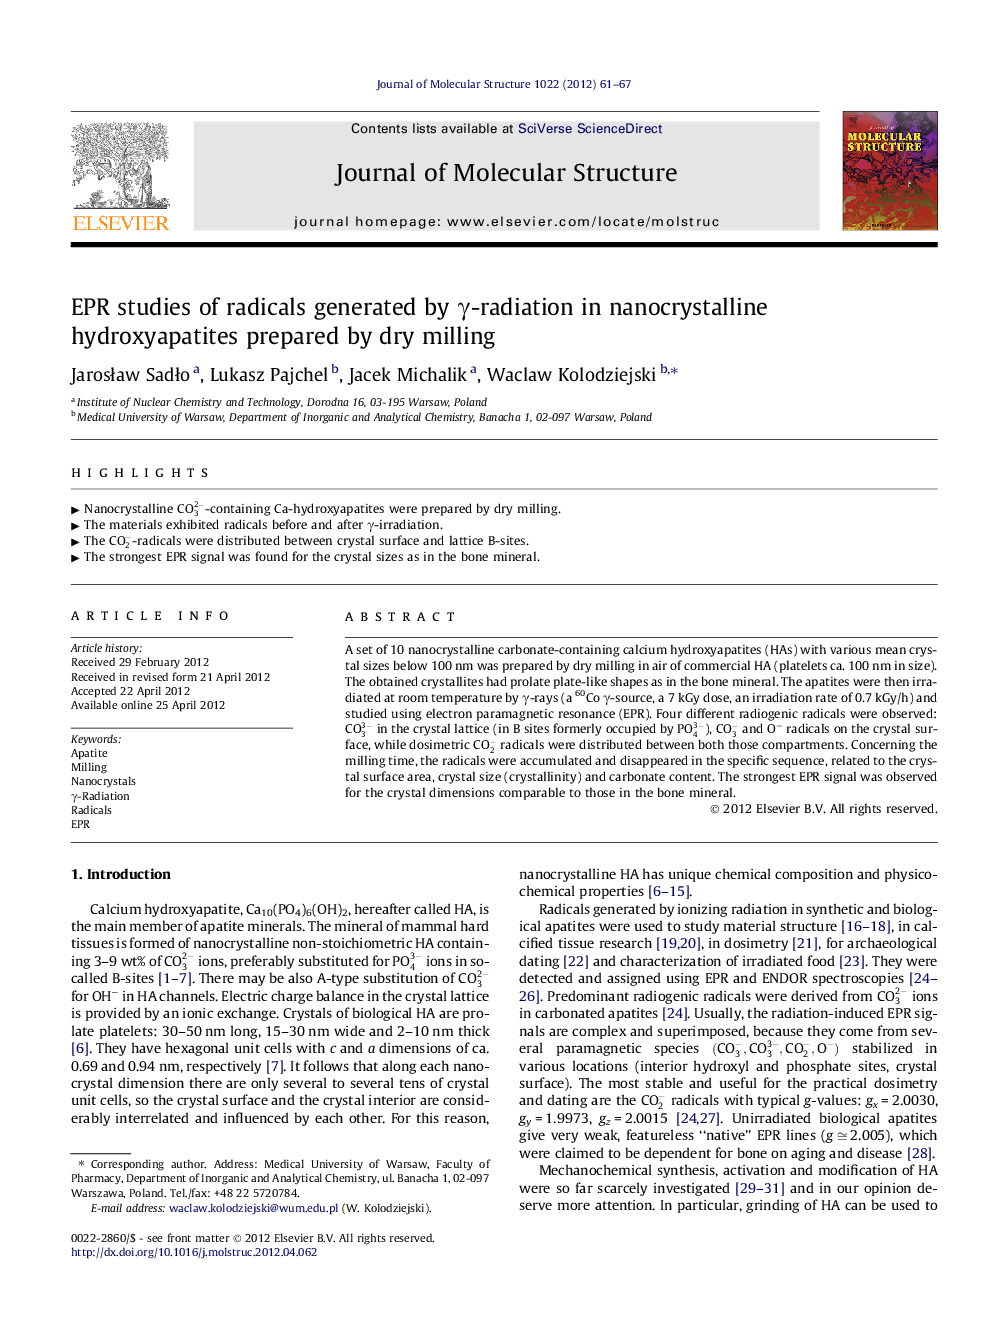 EPR studies of radicals generated by γ-radiation in nanocrystalline hydroxyapatites prepared by dry milling